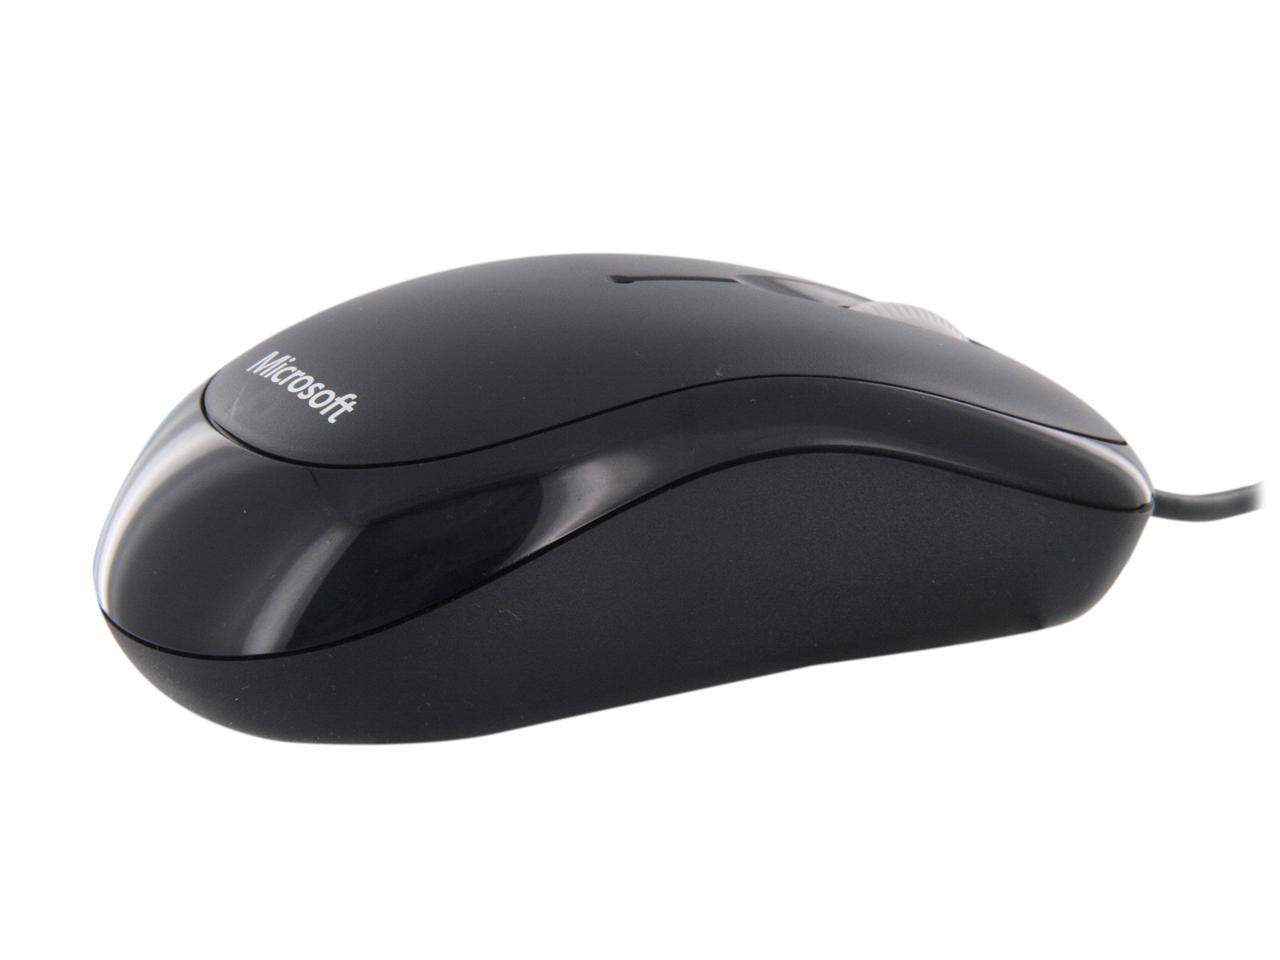 Microsoft 900 2.4GHZ Wireless Mouse Portable Mute Office Desktop PC Silent Mice 